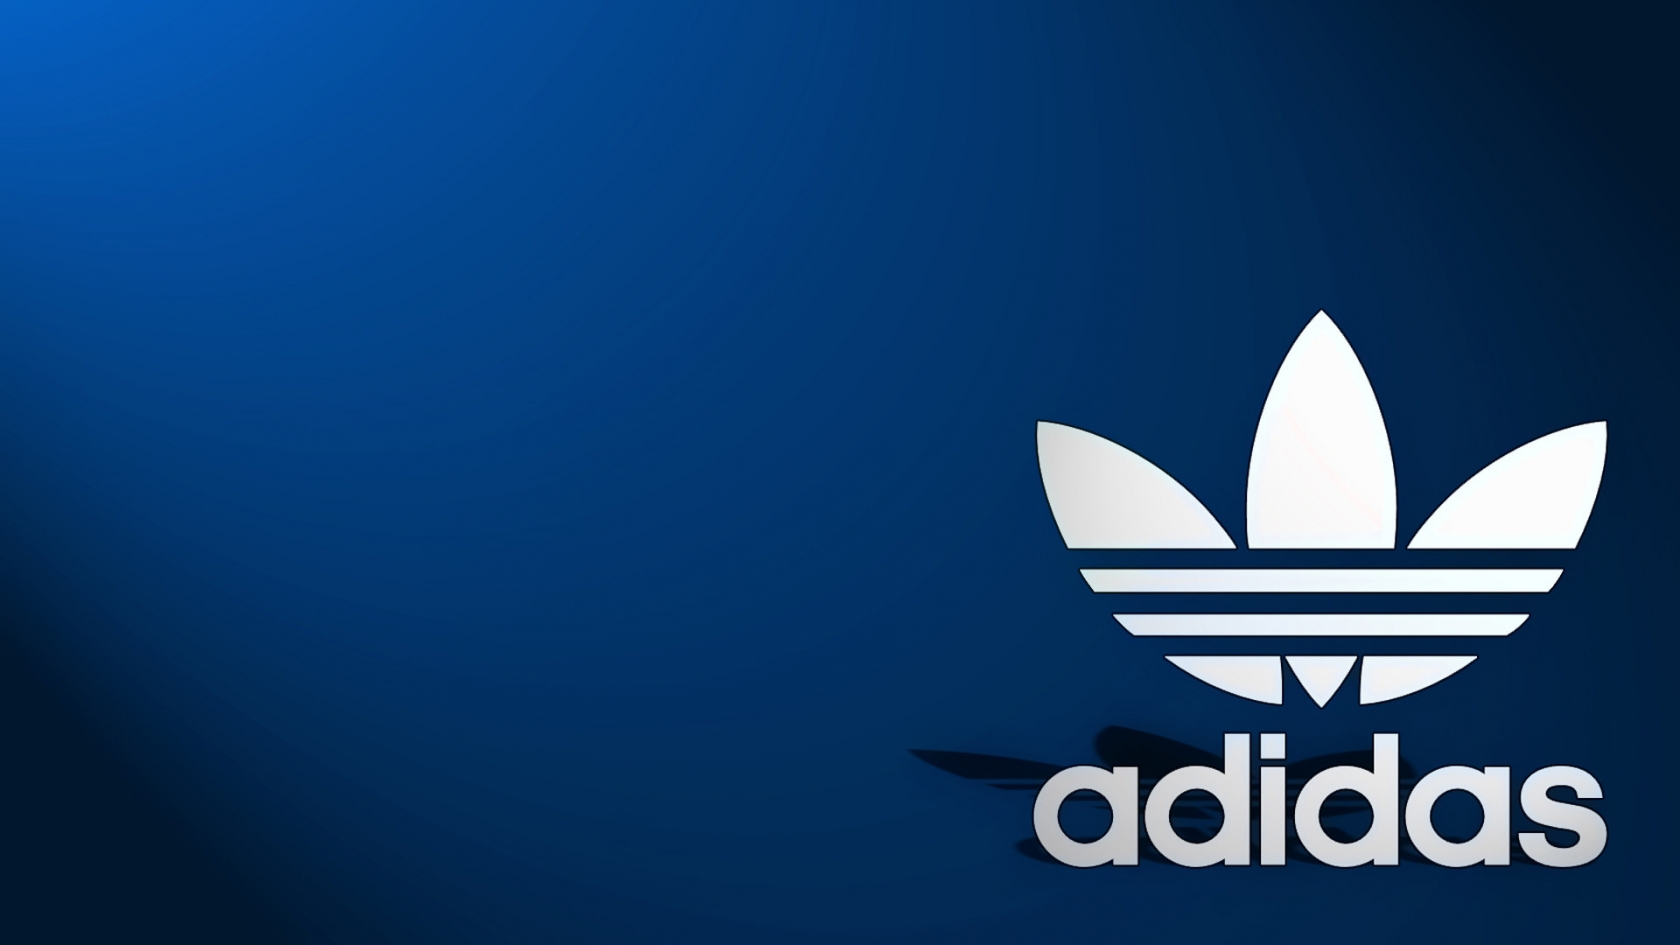 Adidas Logo Blue Background for 1680 x 945 HDTV resolution